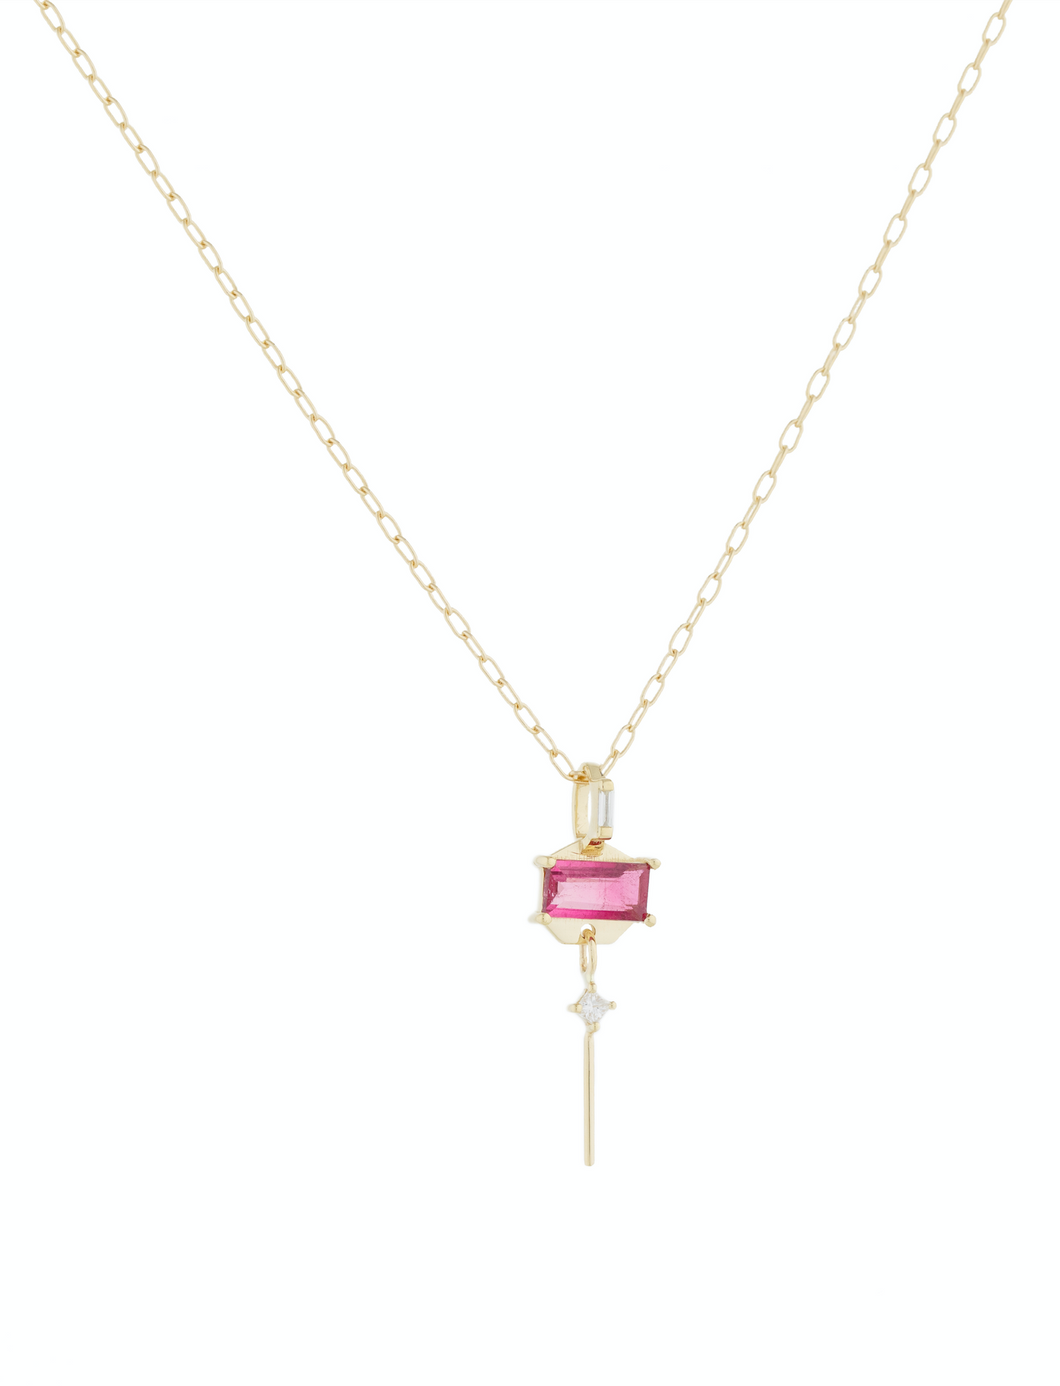 Celine Daoust Pink Tourmaline, Baguette, & Dangling Diamond Necklace